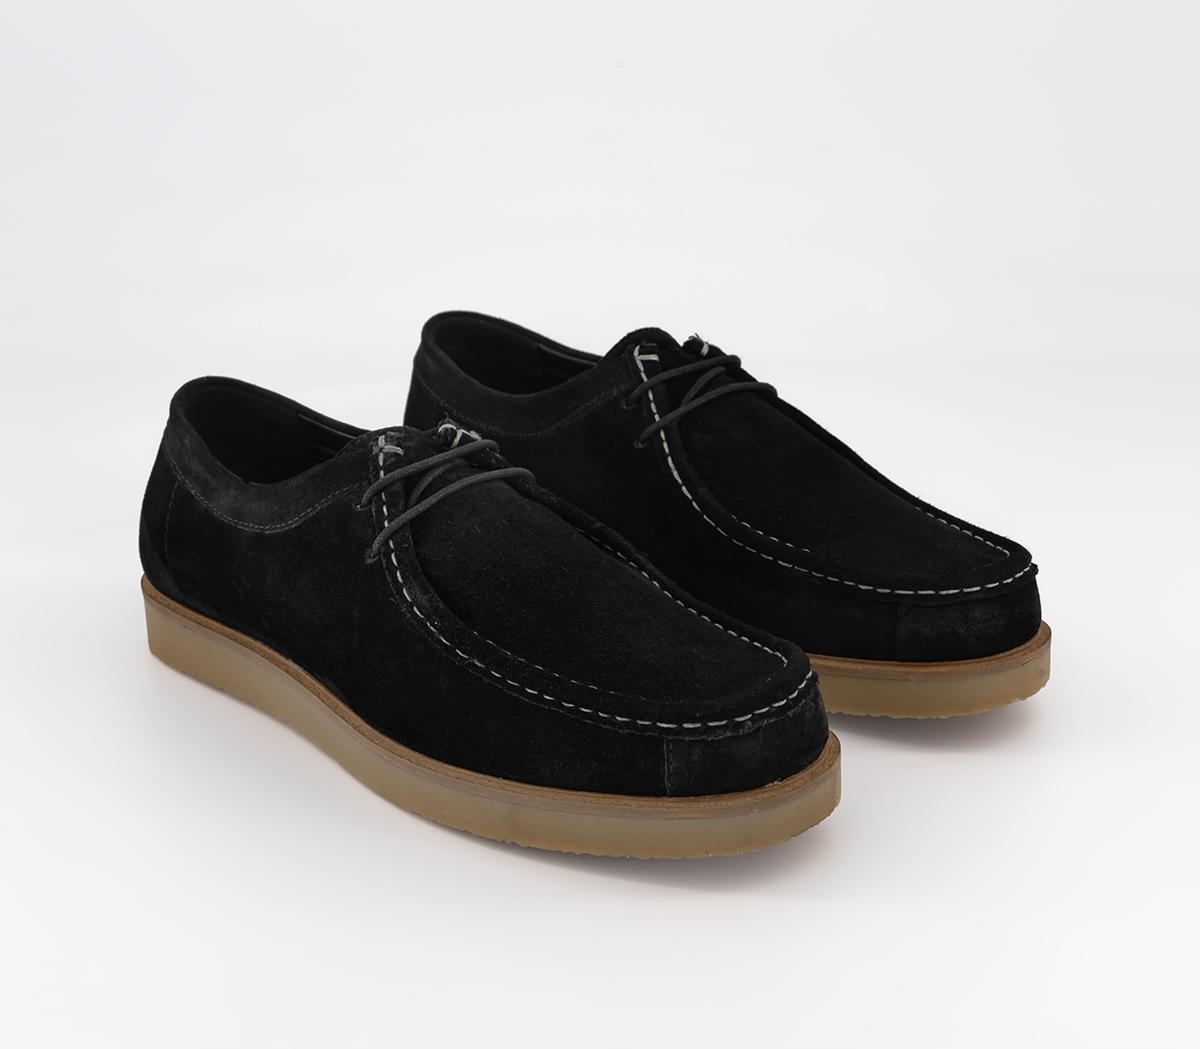 OFFICE Mens Carter Stitch Apron Desert Shoes Black Suede, 9